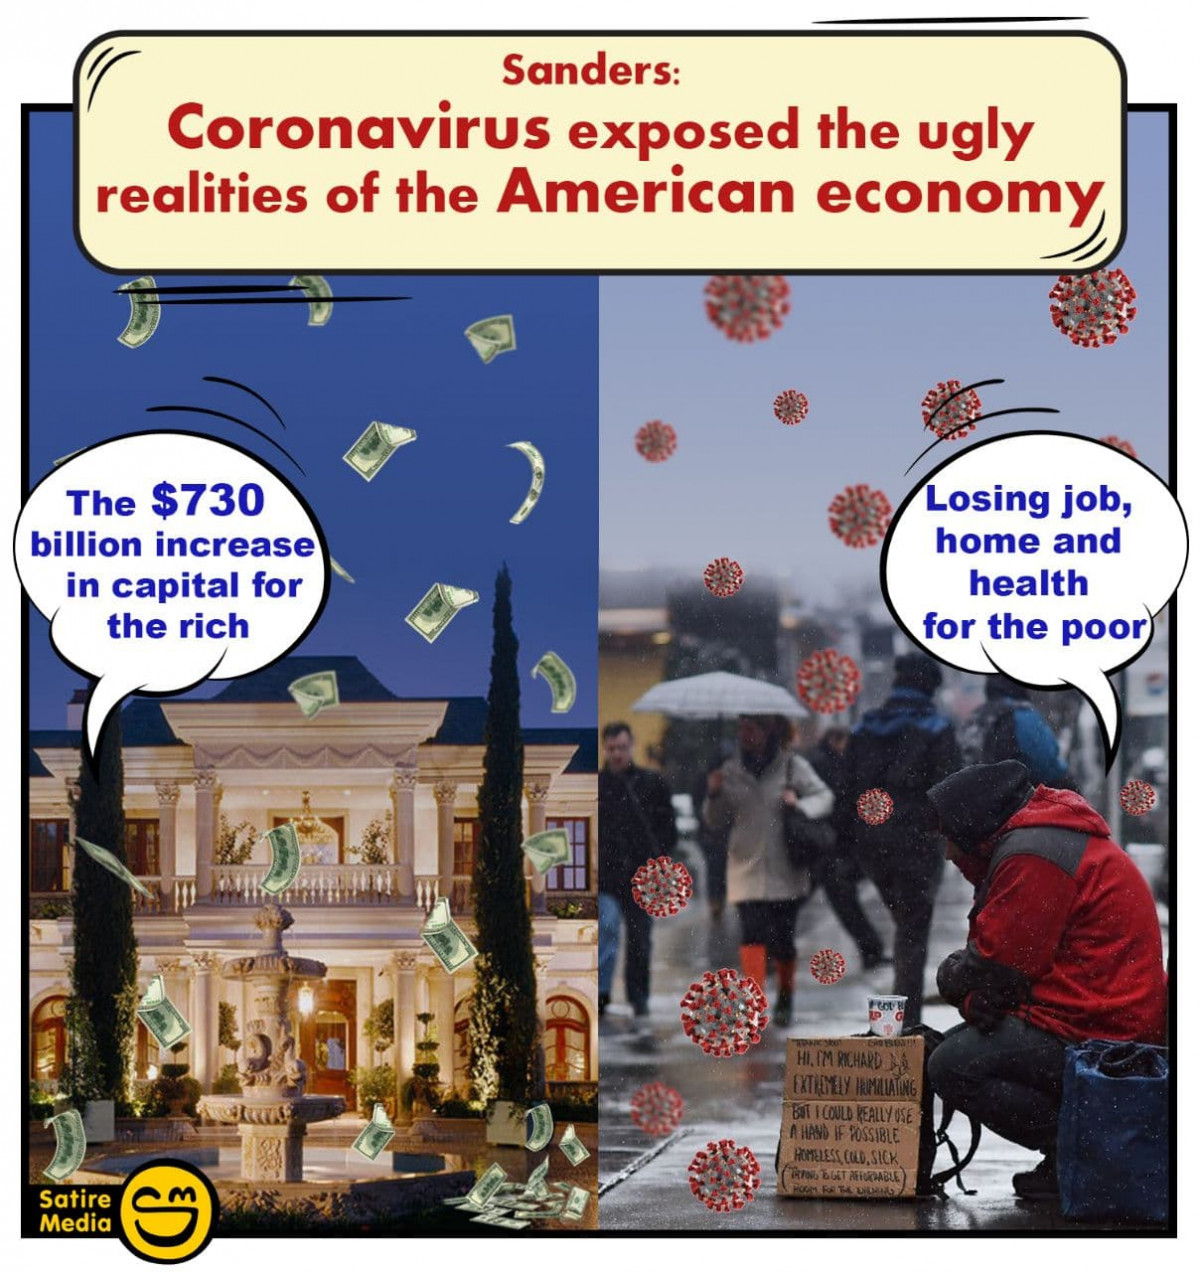 Sanders: Coronavirus exposed the ugly realities of the American economy